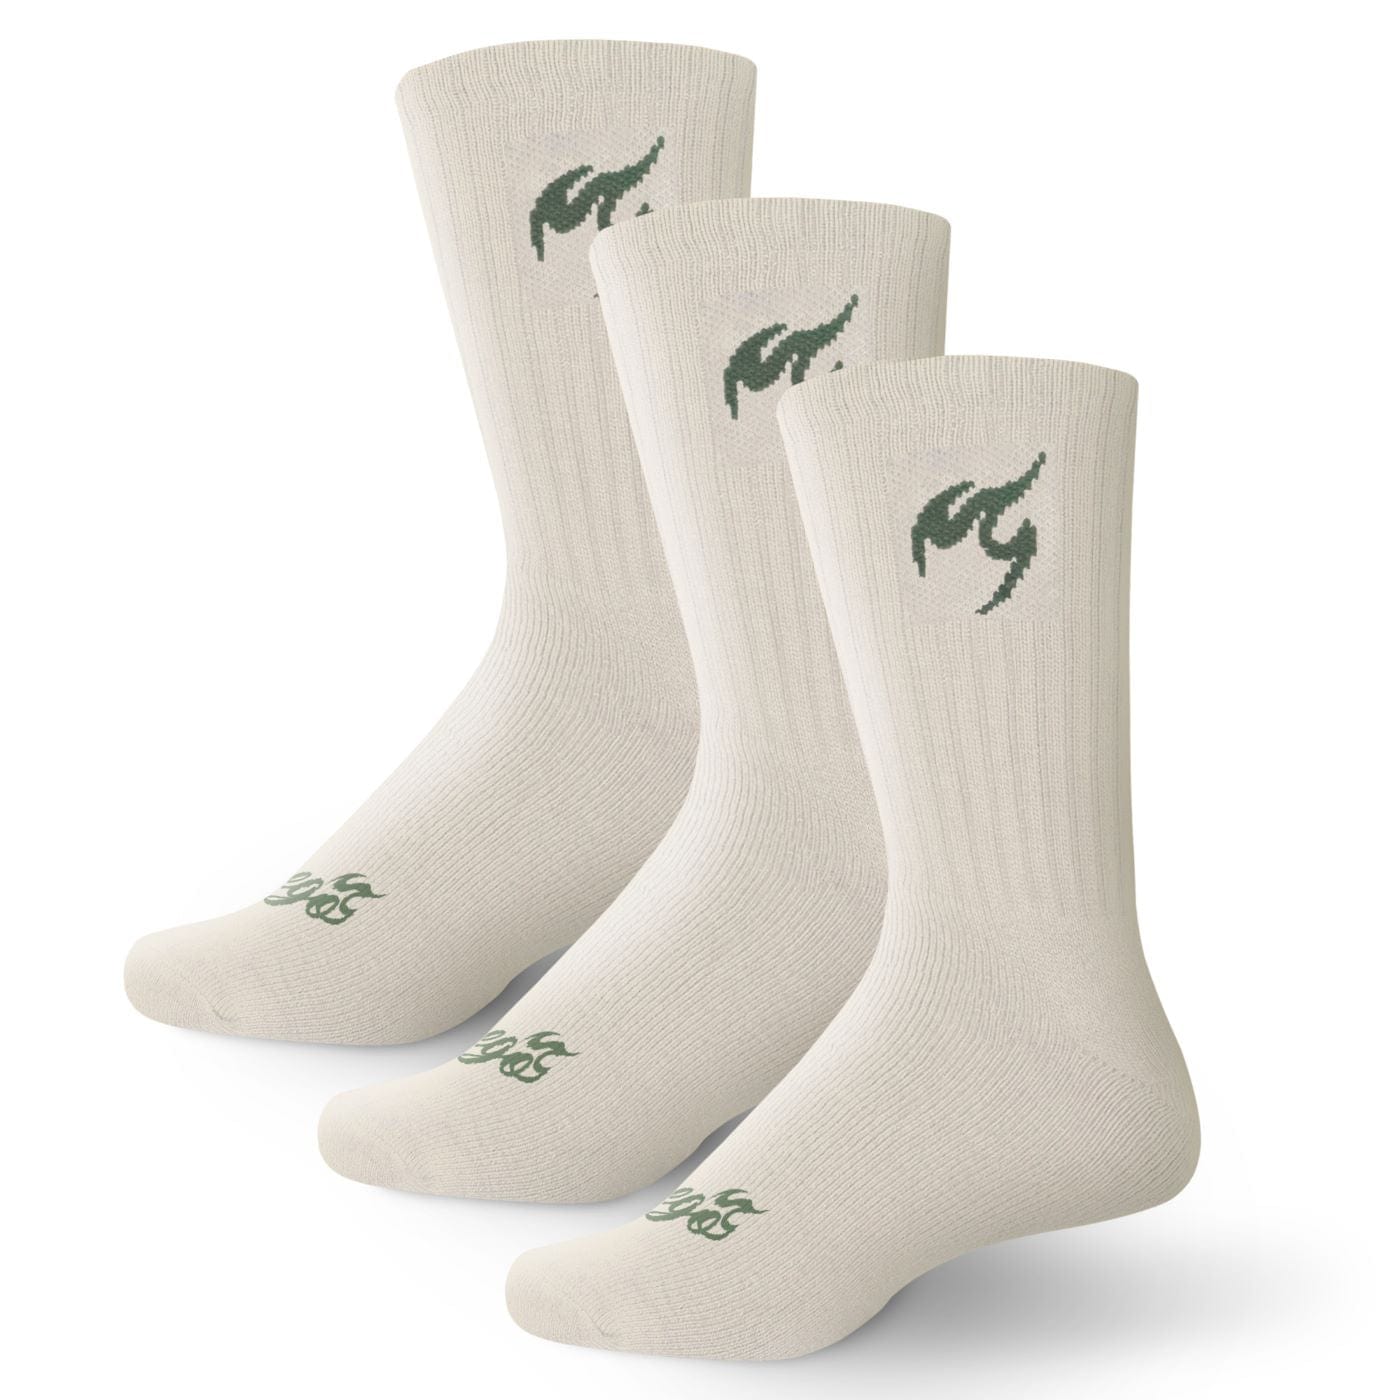 Fuego, Inc. Socks Crew Socks | White (3-pair)